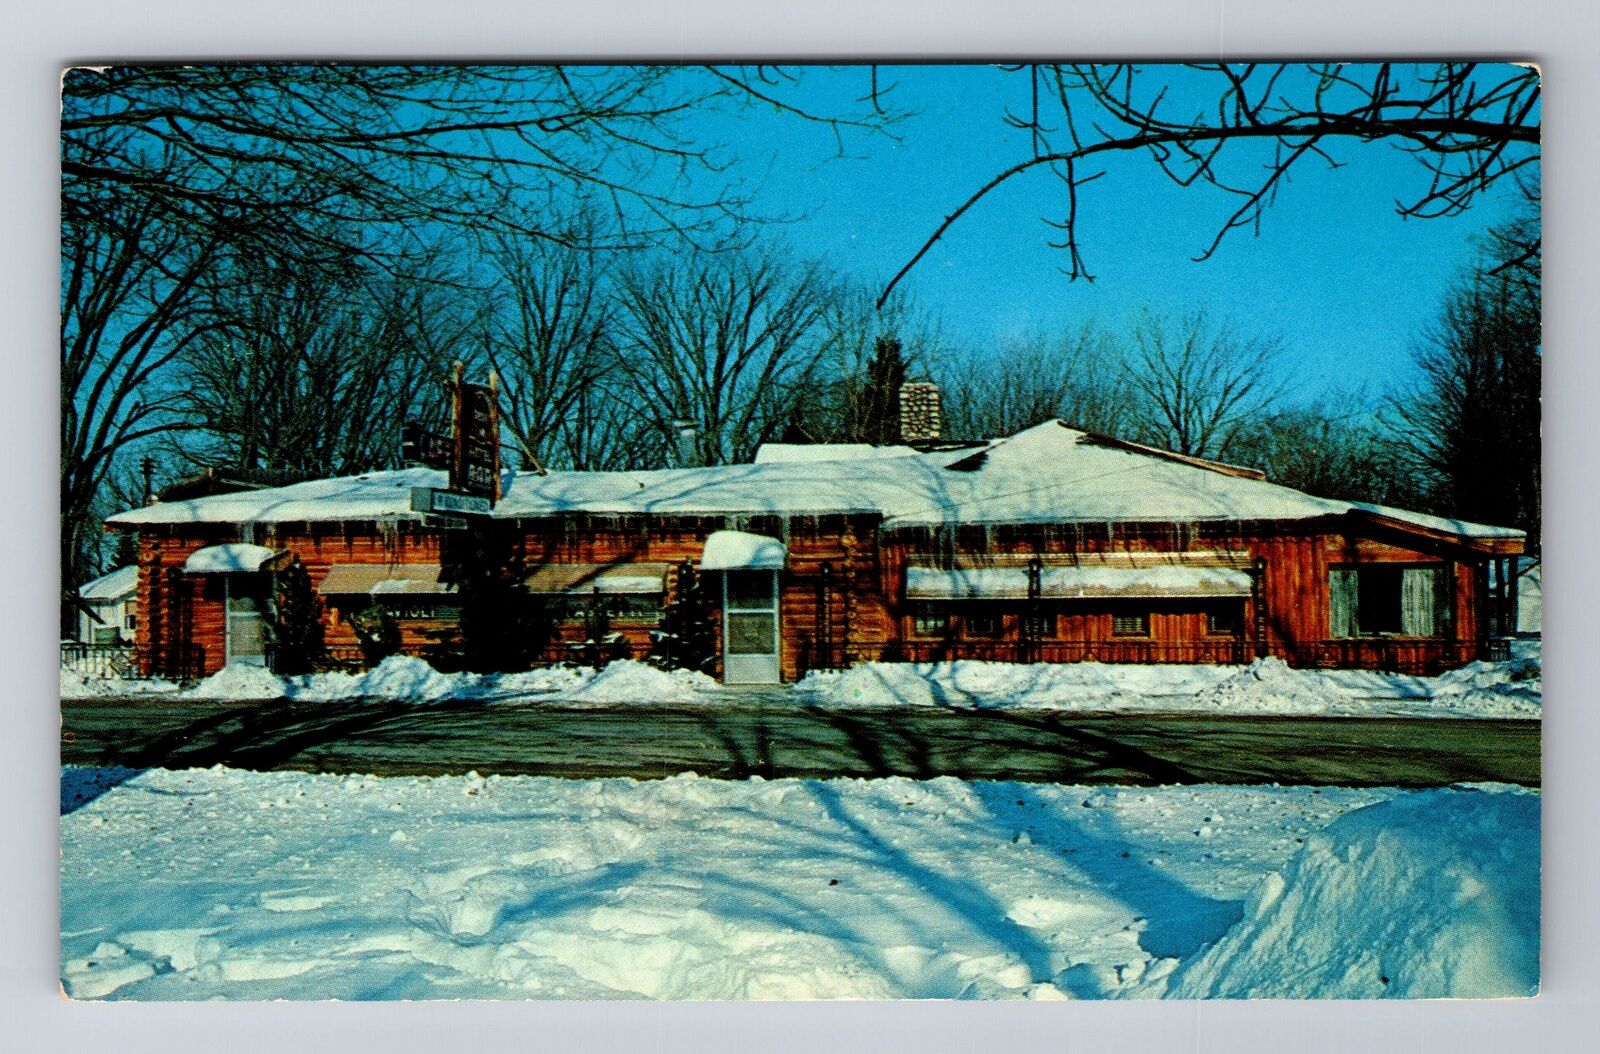 Houghton Lake Heights MI-Michigan, Tam-A-Rac Lodge, Advertising Vintage Postcard